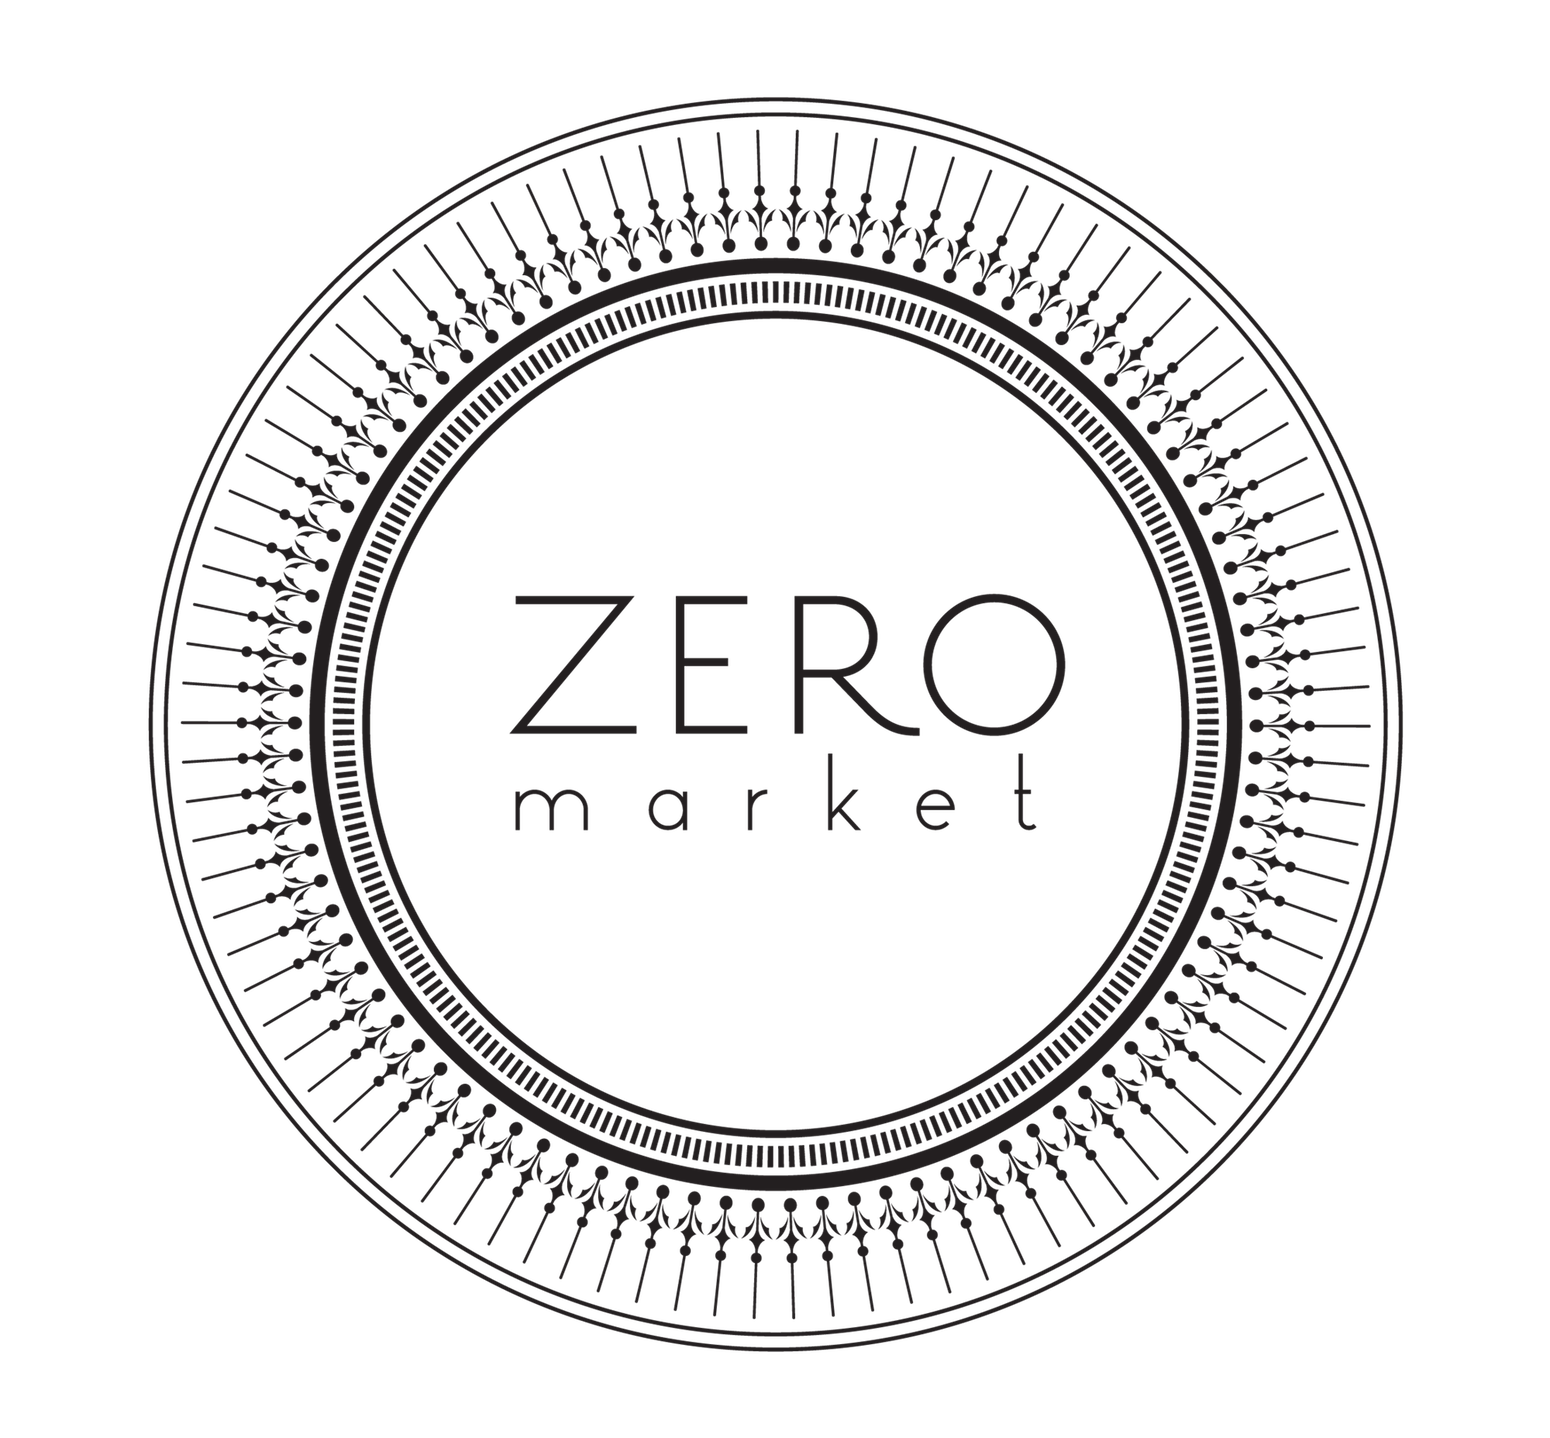 ZERO market logo